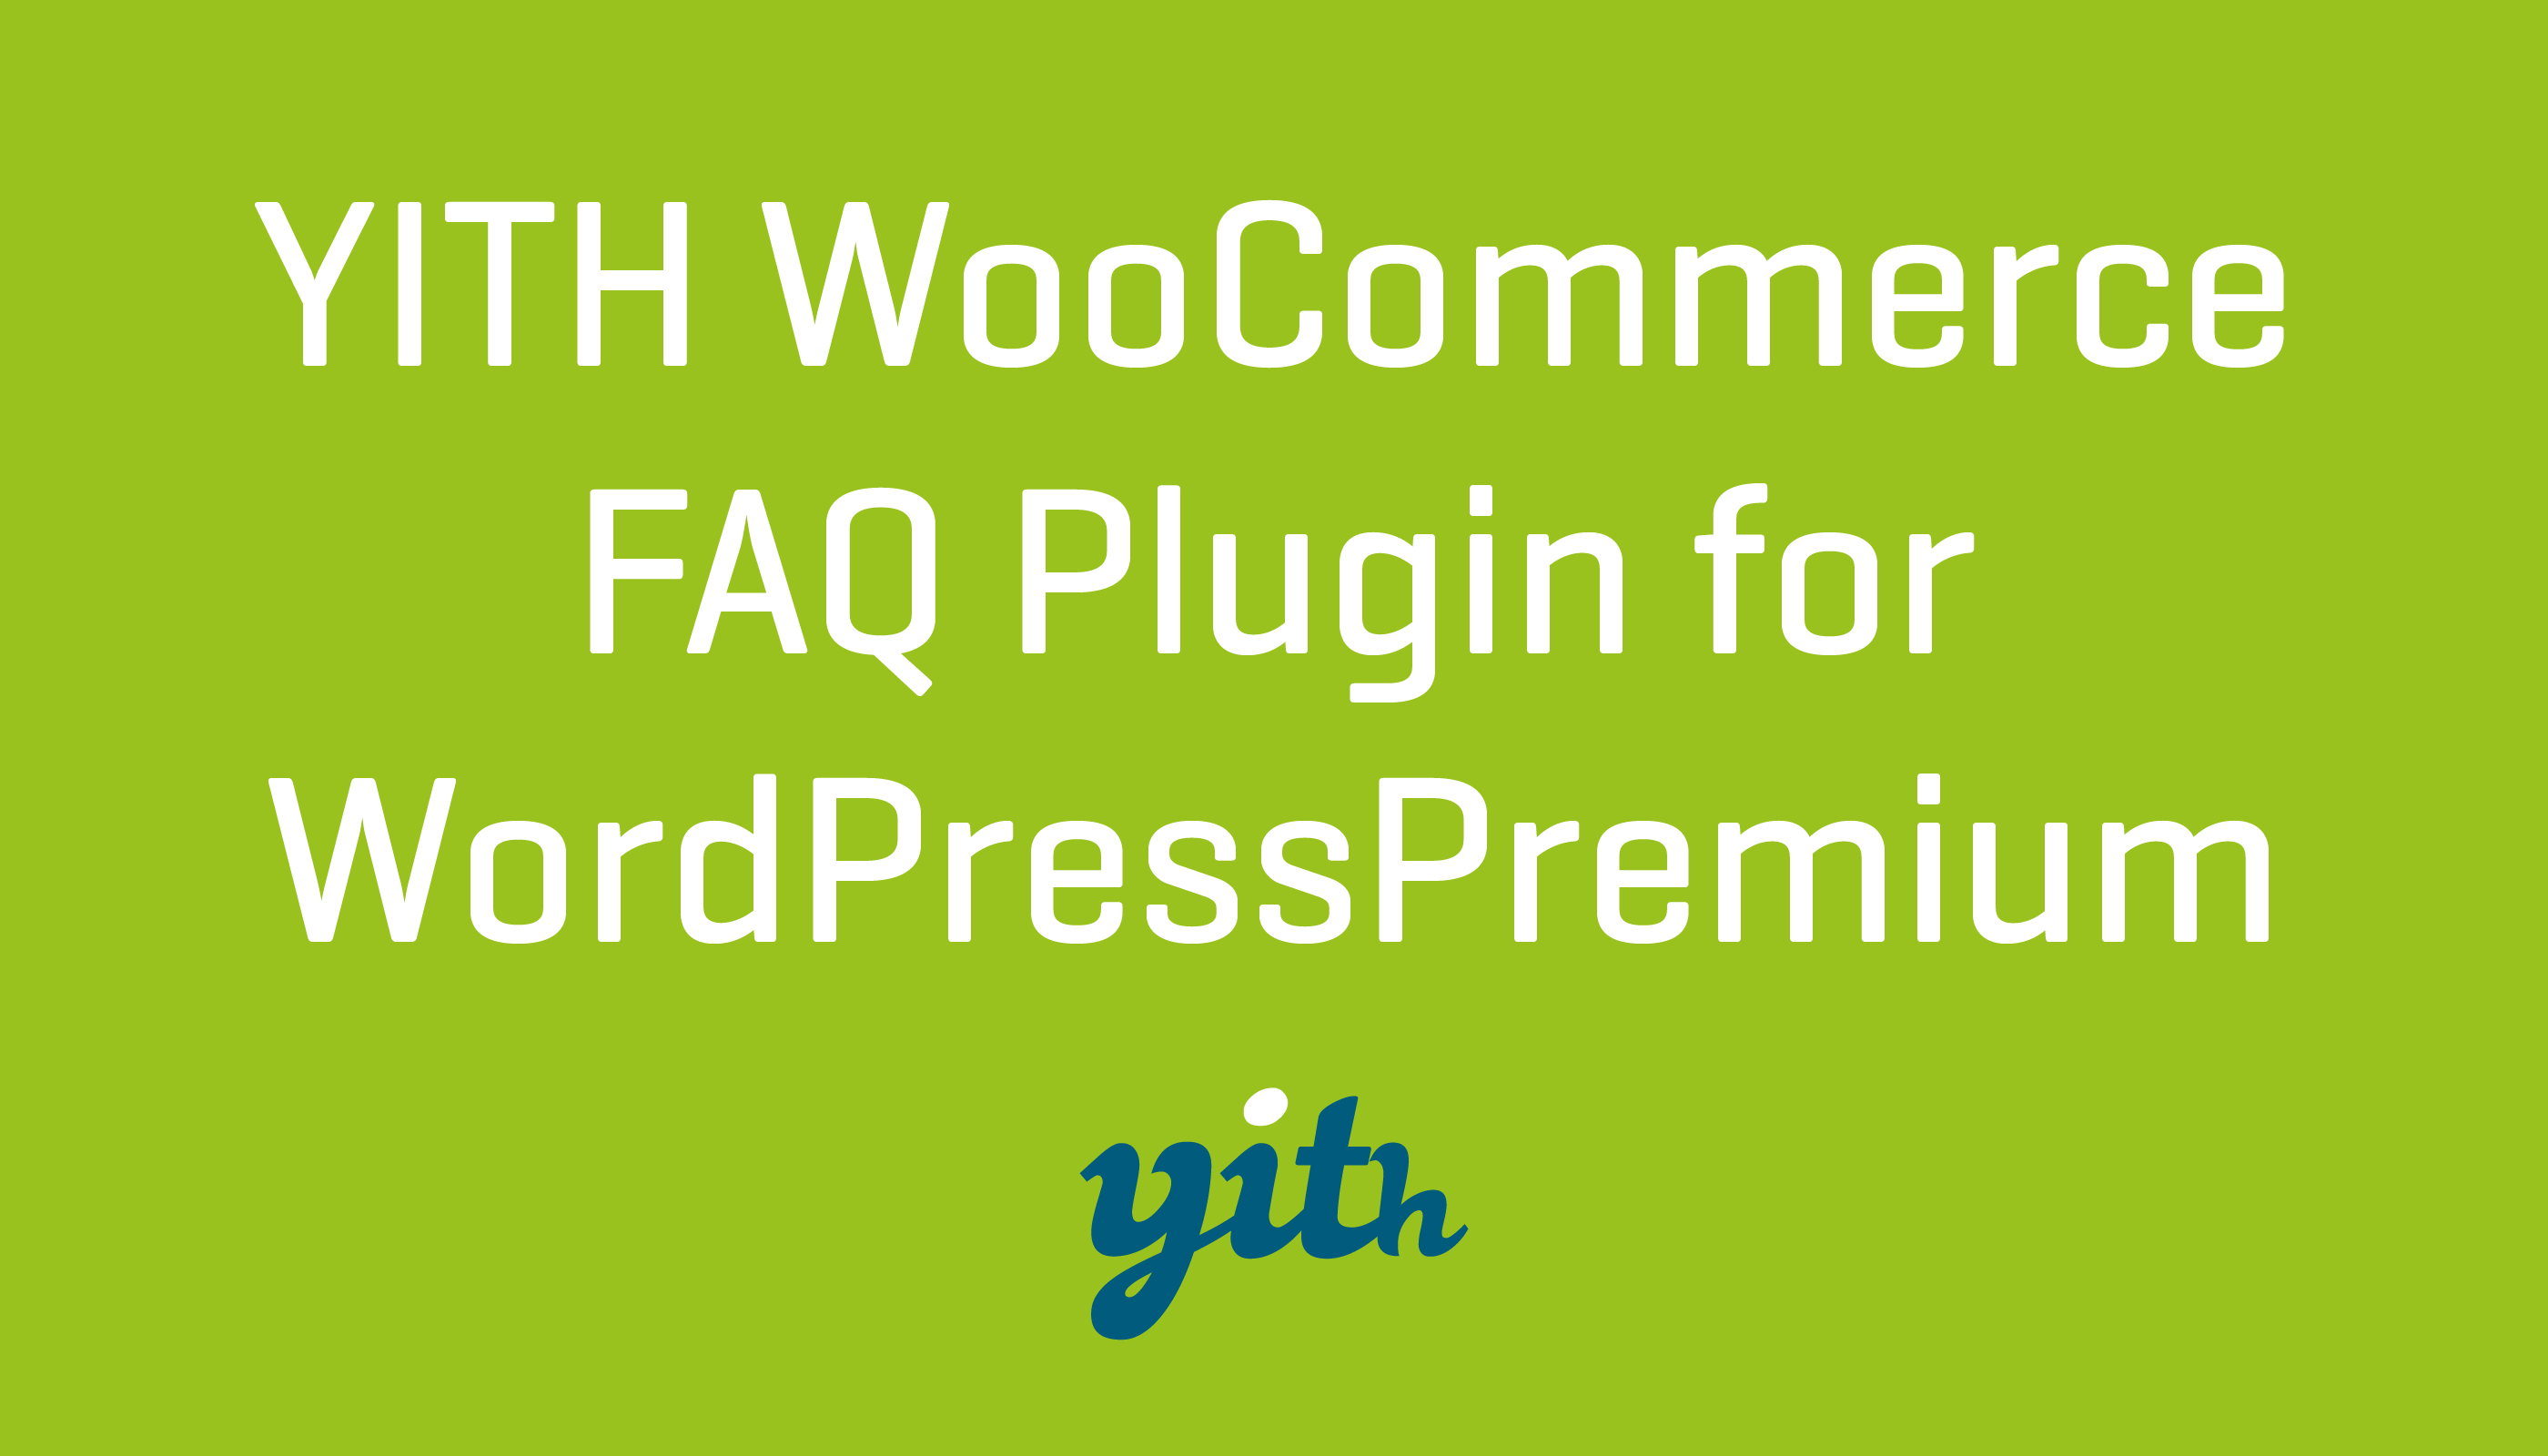 YITH WooCommerce FAQ Plugin for WordPress Premium